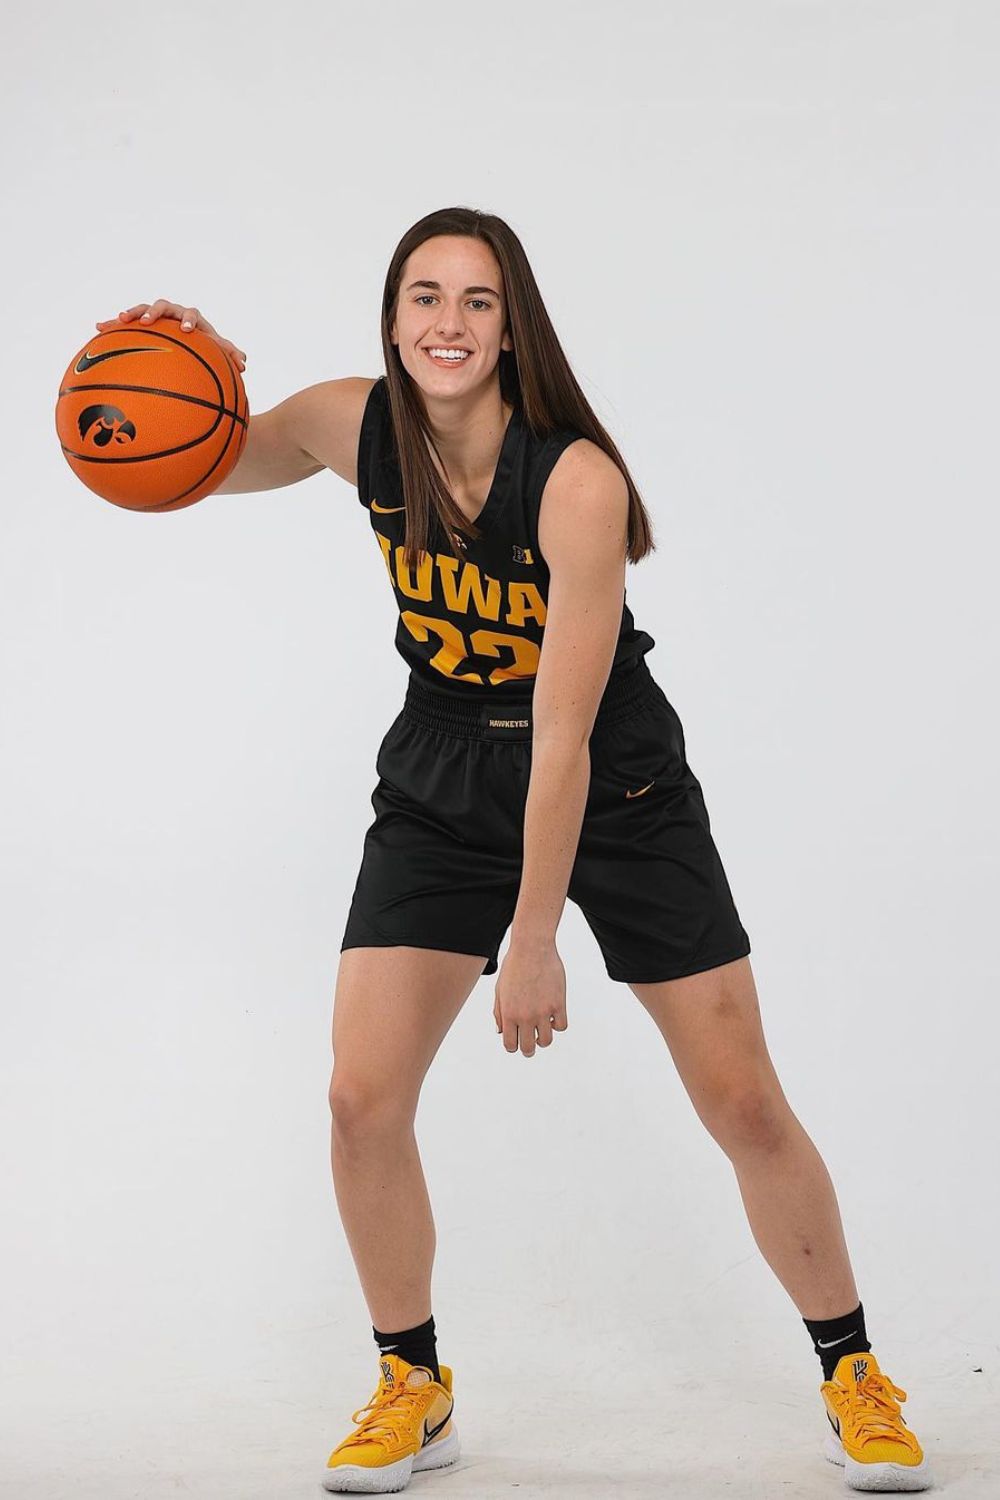 American College Basketball Player Caitlin Clark